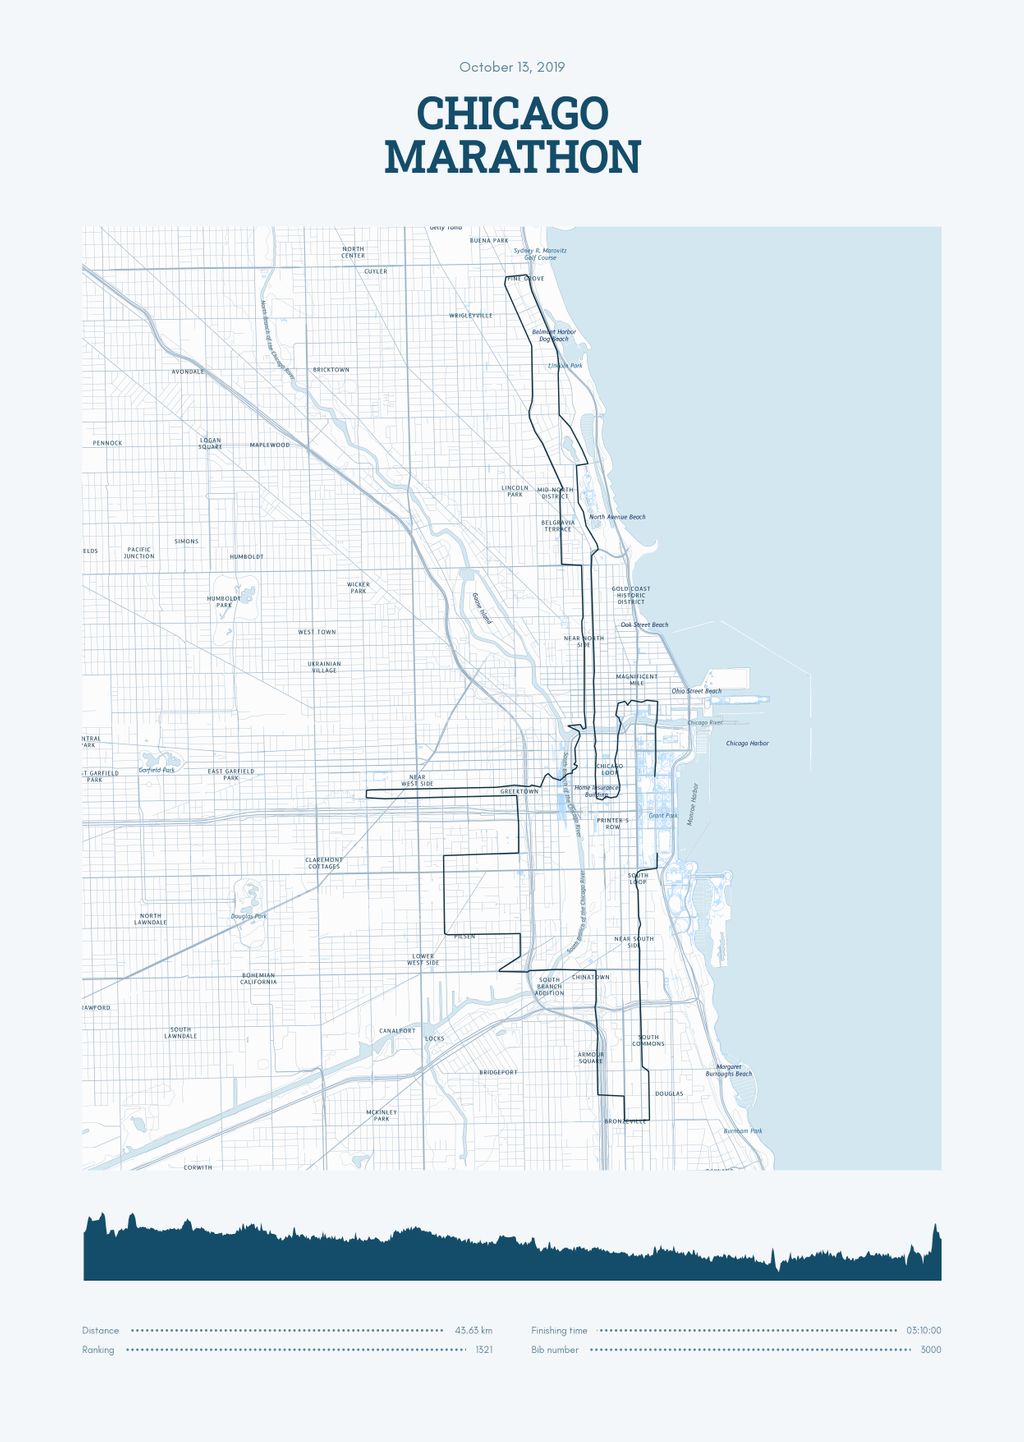 Póster con un mapa de Chicago
Marathon